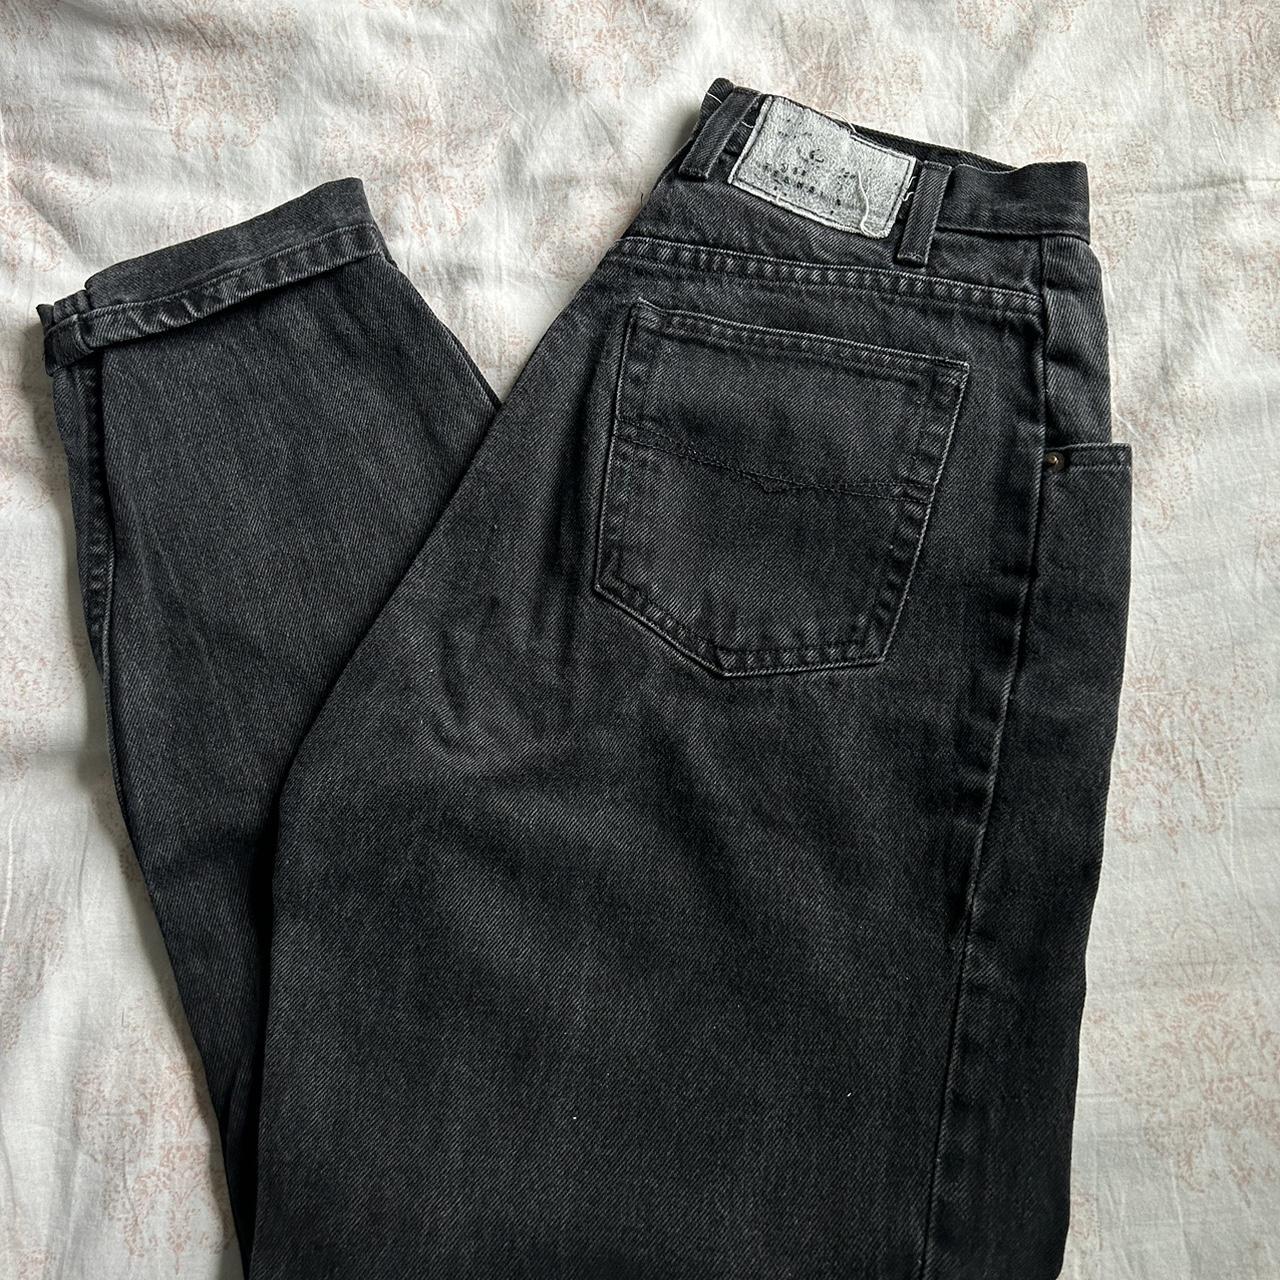 Route 66 black jeans. Perf vintage fit and texture - Depop